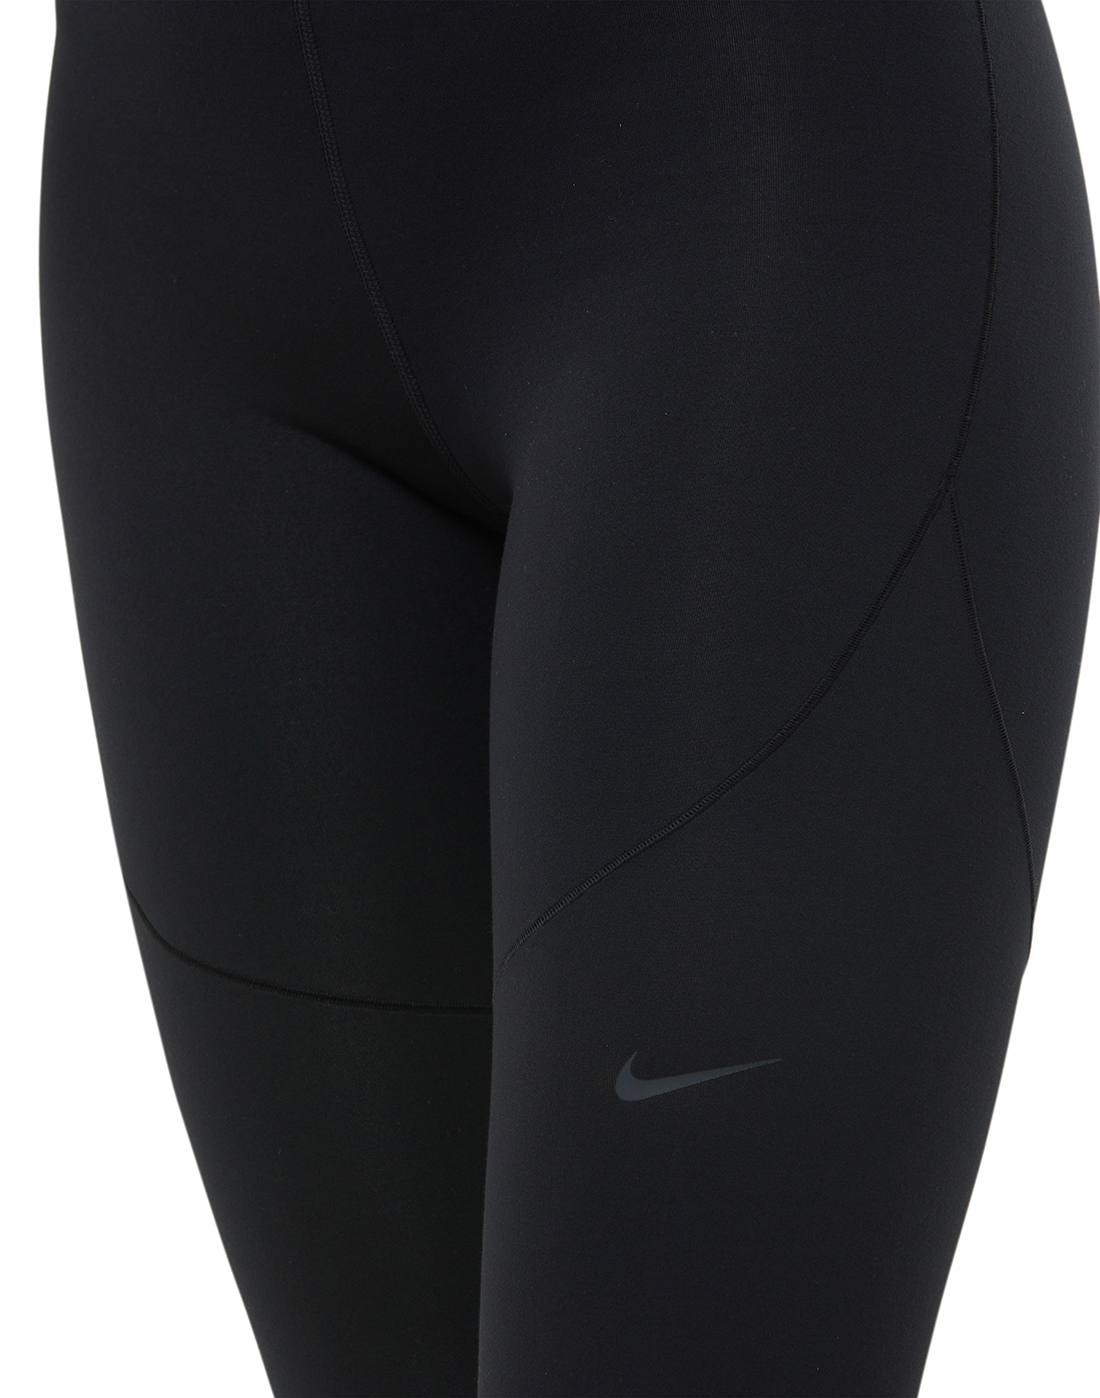 Buy Nike Pro Therma Warm Tights - CU4595 Women's Black Legging